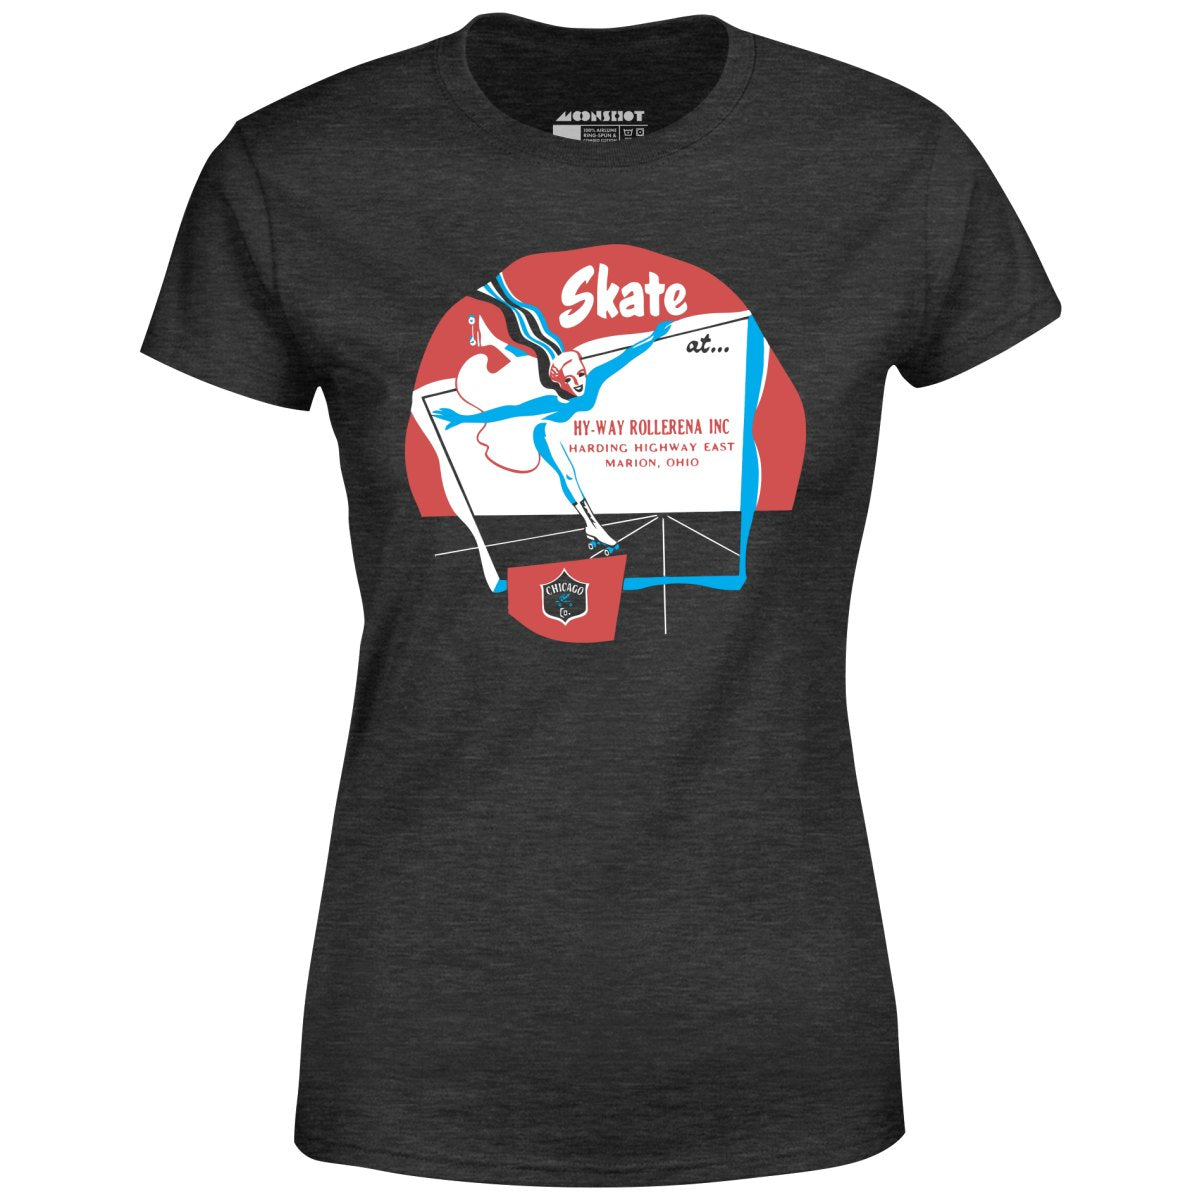 Hy-Way Rollerena - Marion, OH - Vintage Roller Rink - Women's T-Shirt